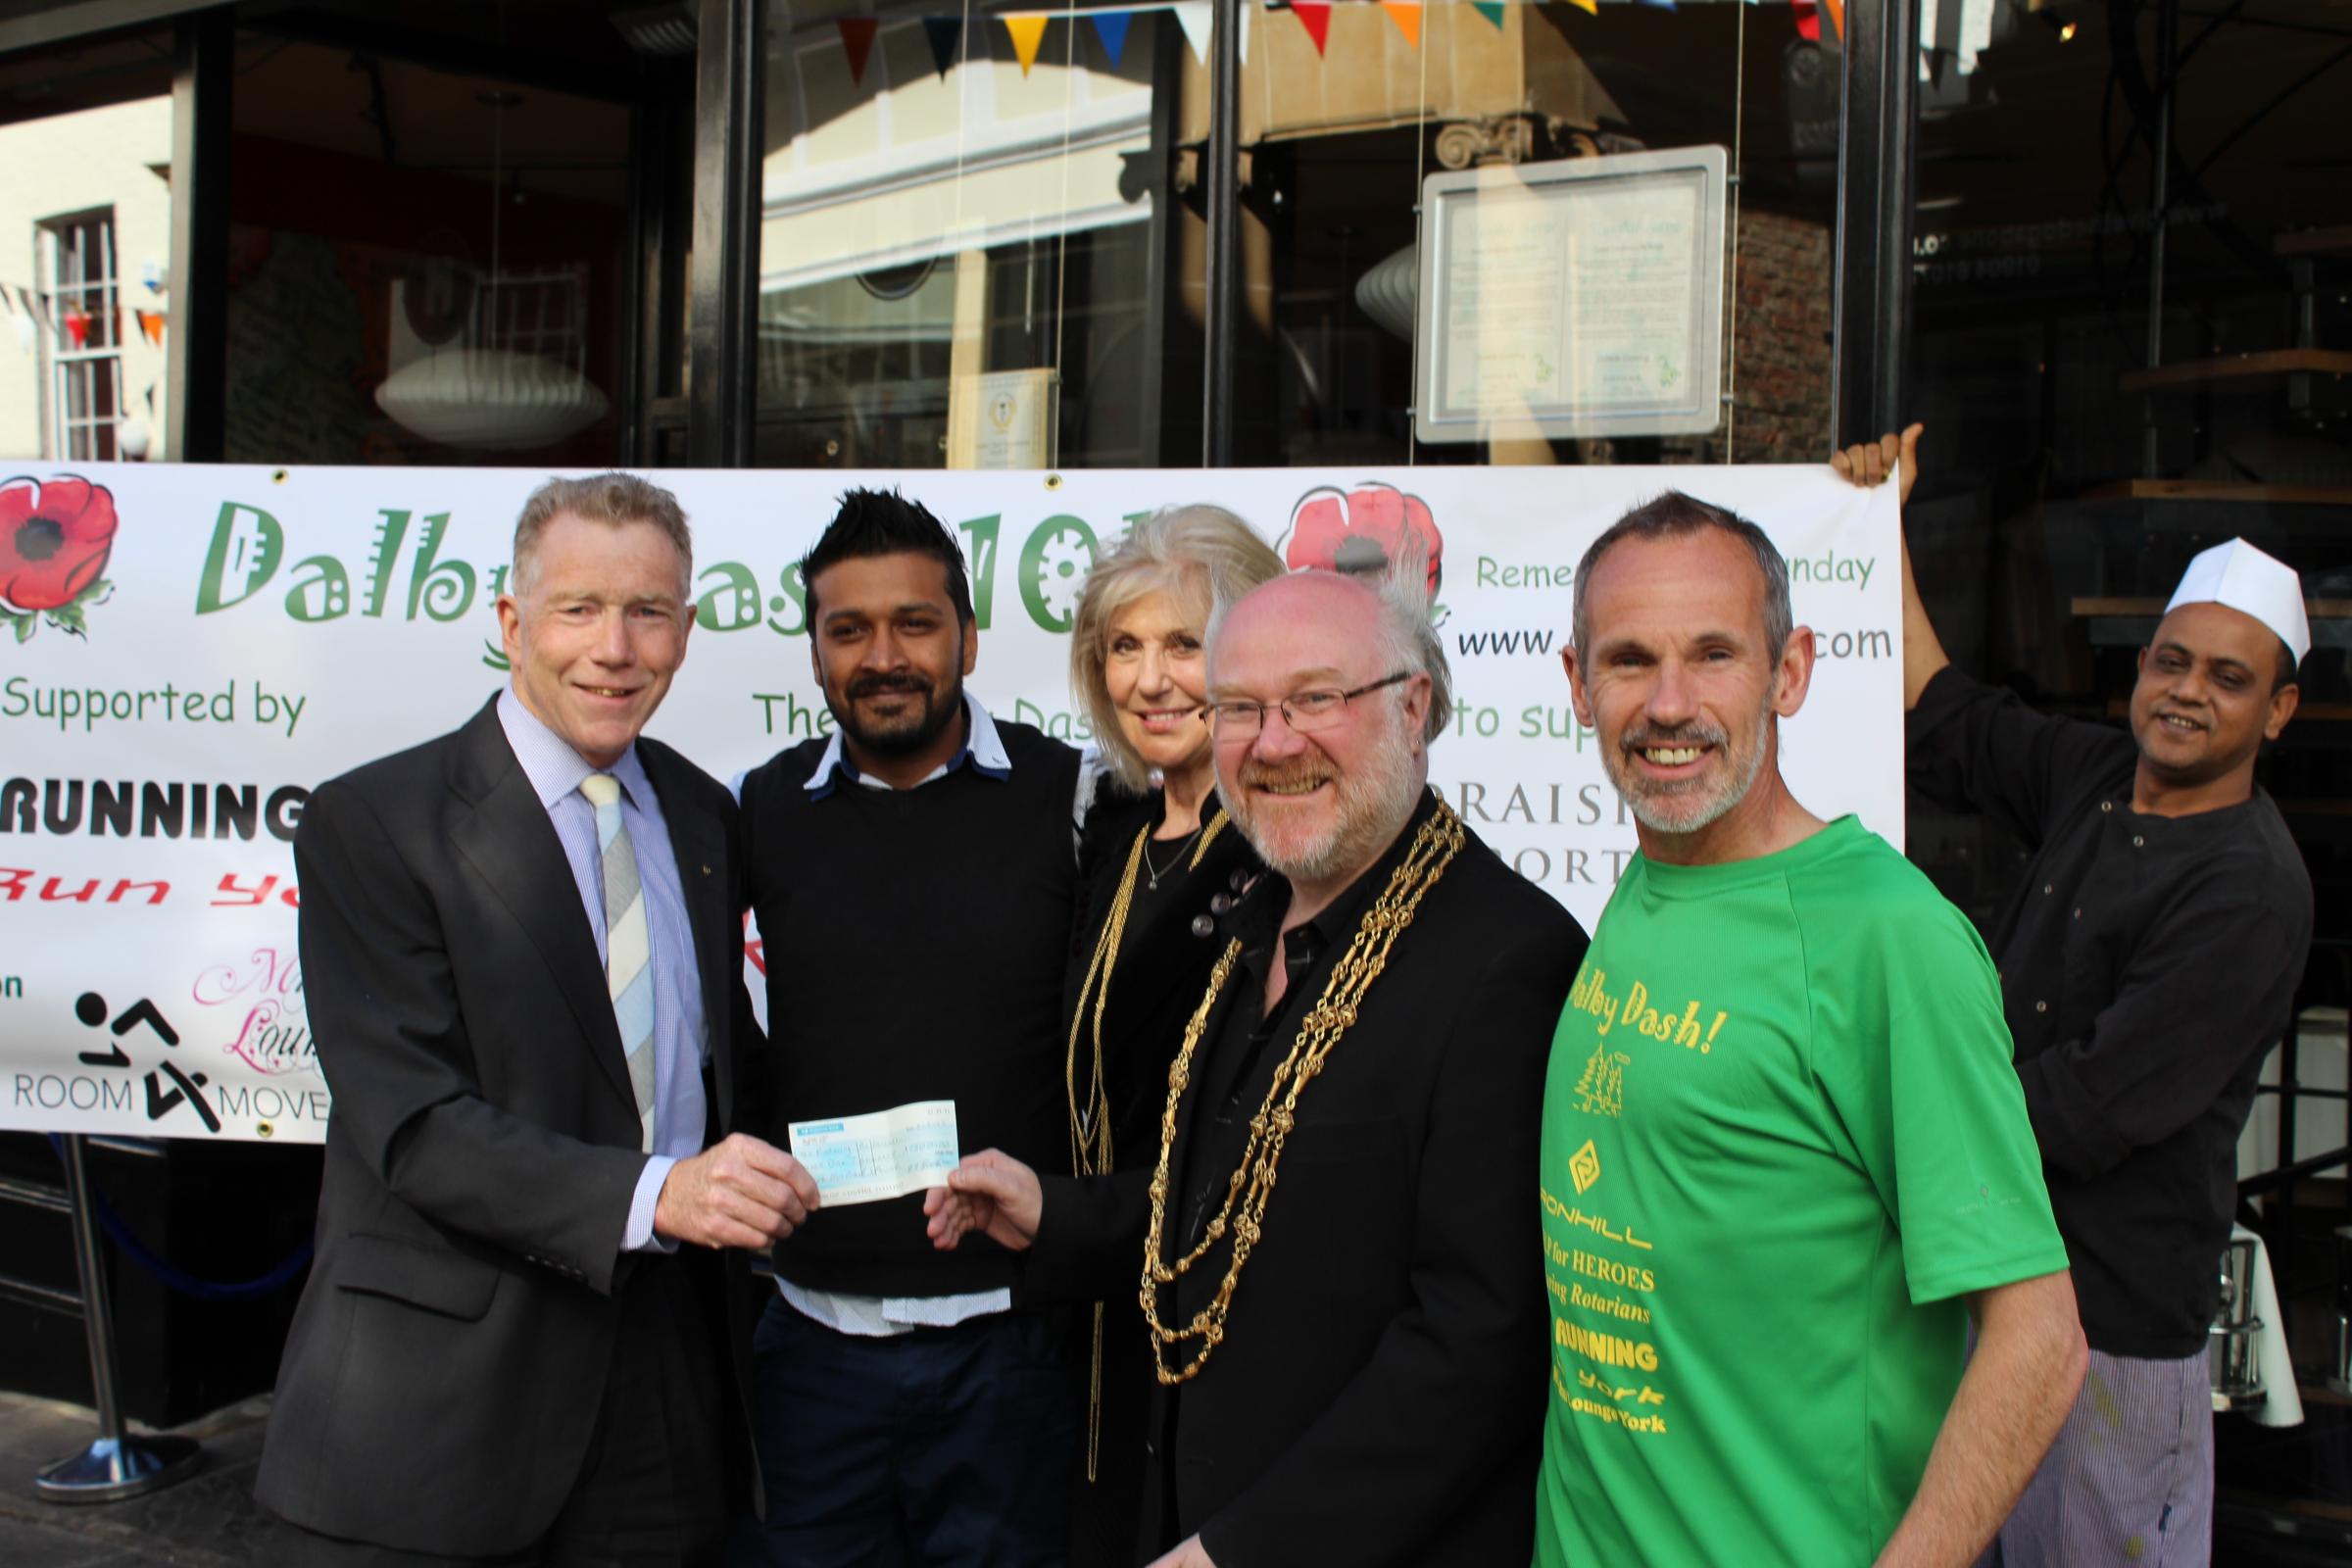 10k Dalby Dash donation boosts local charities - Gazette & Herald